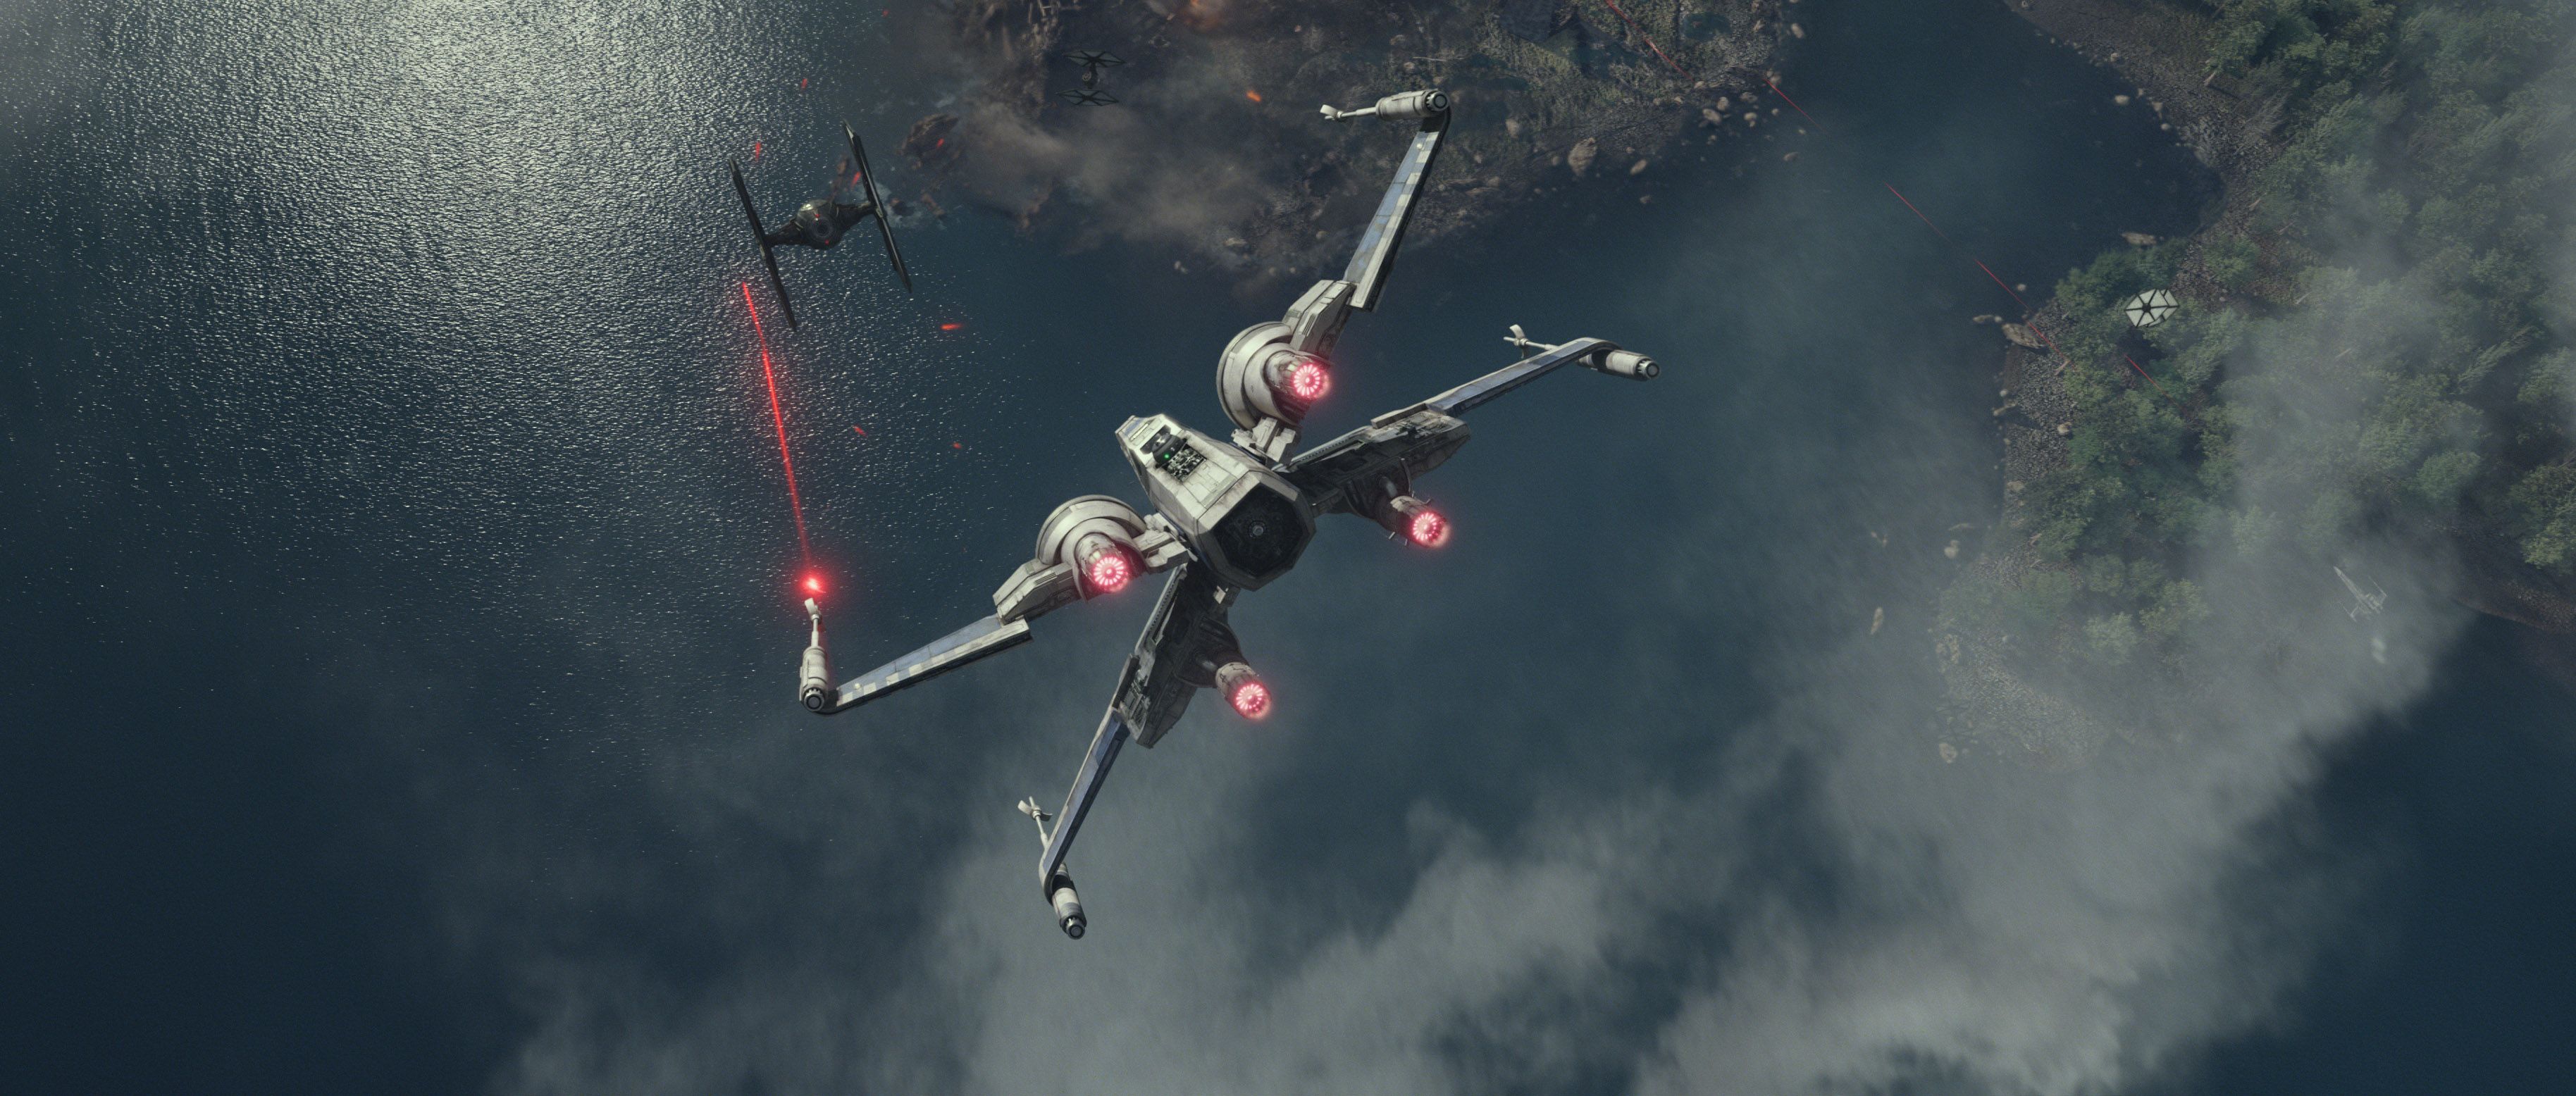 Star Wars 7 Trailer #3 - X-Wing vs Tie Fighters